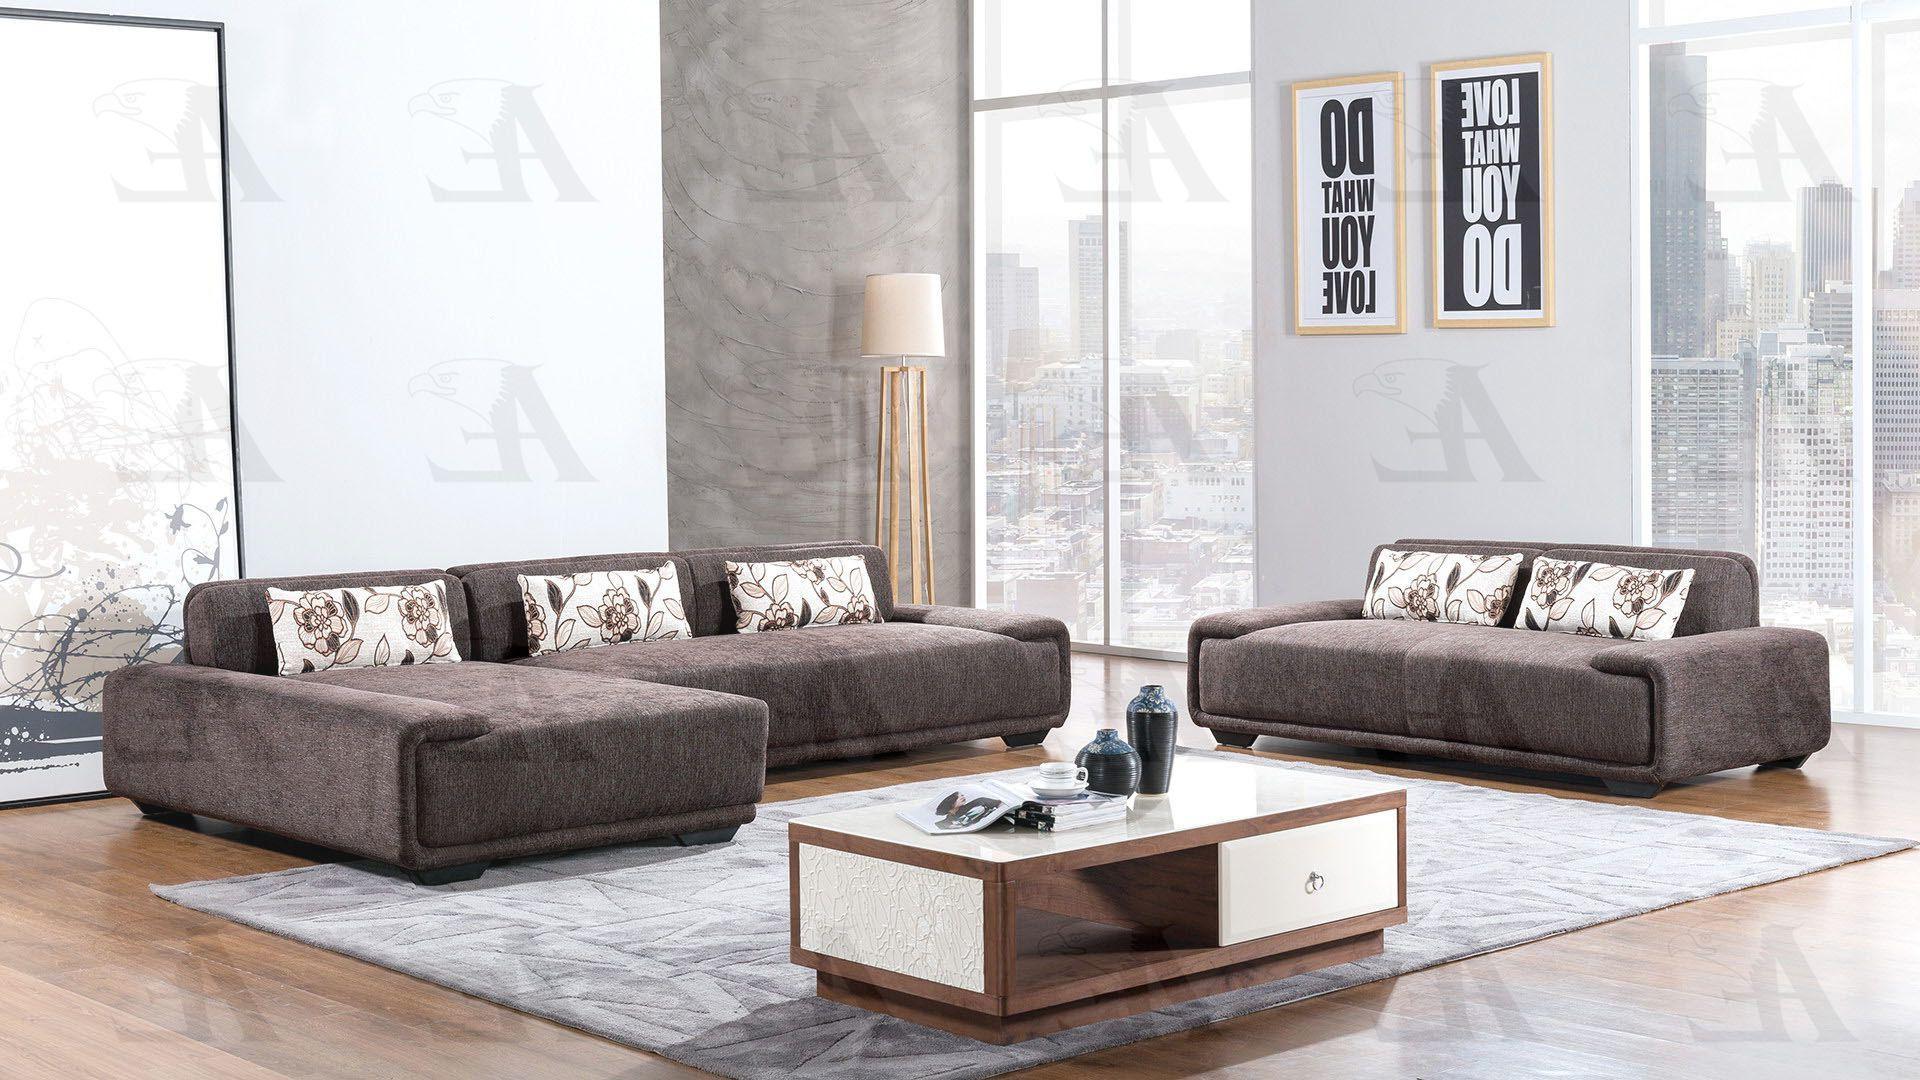 American Eagle Furniture AE-L2002 Sofa Chaise and Loveseat Set